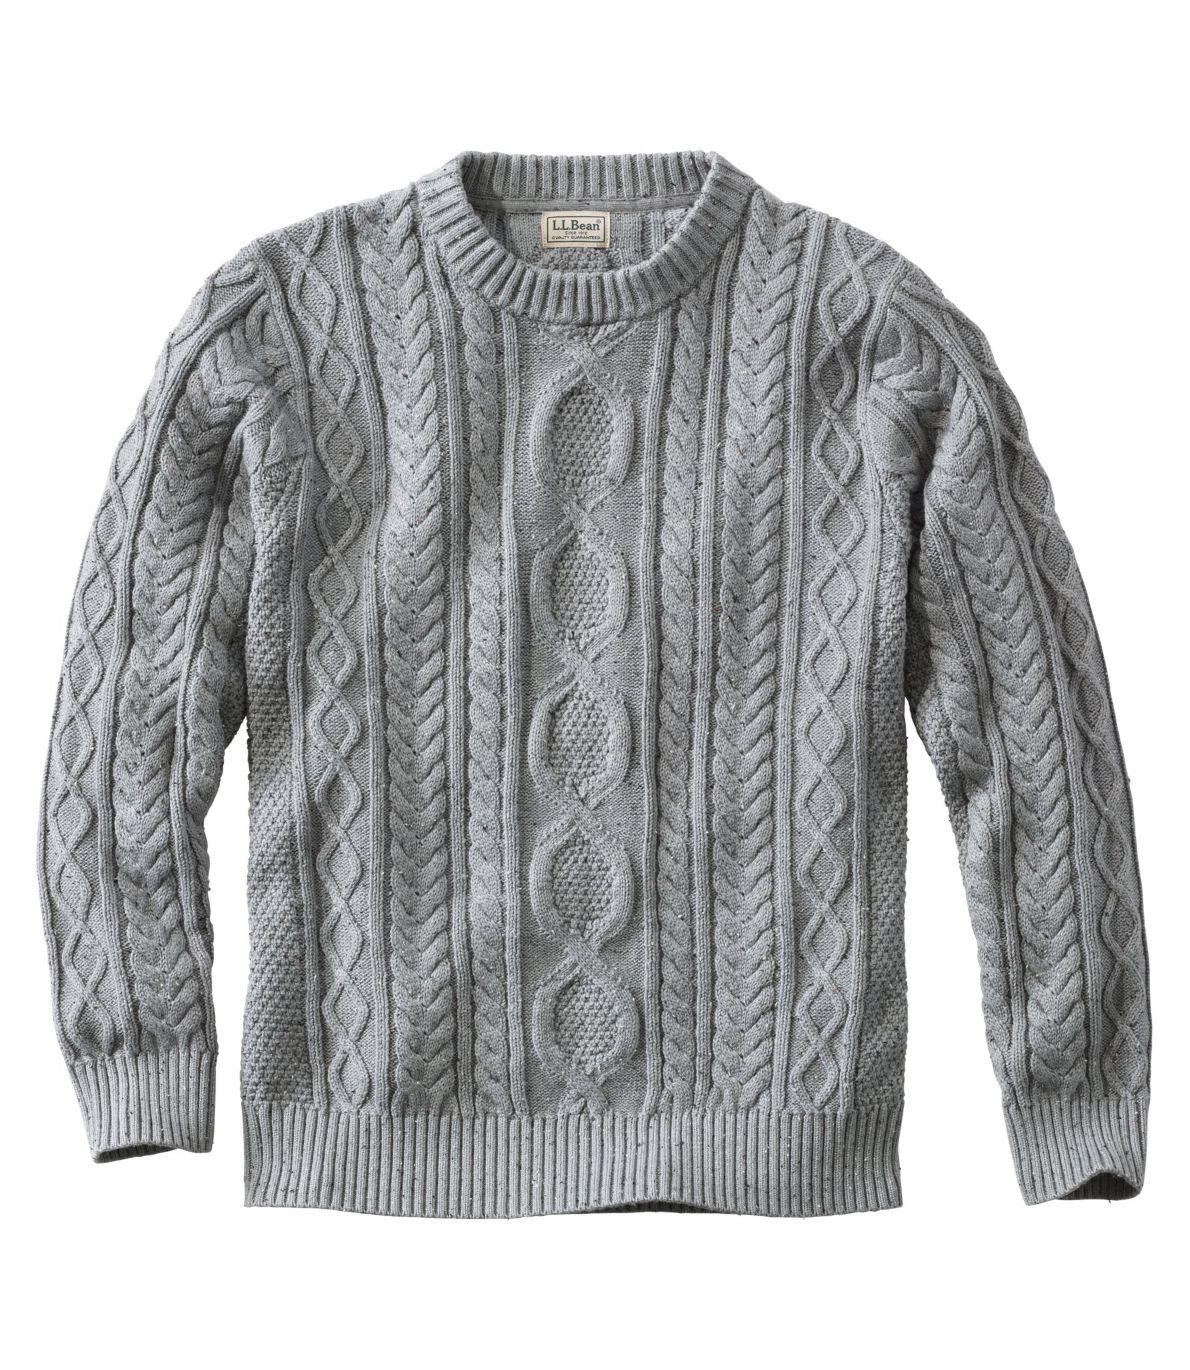 Men's Bean's Heritage Soft Cotton Fisherman Sweater, Crewneck at